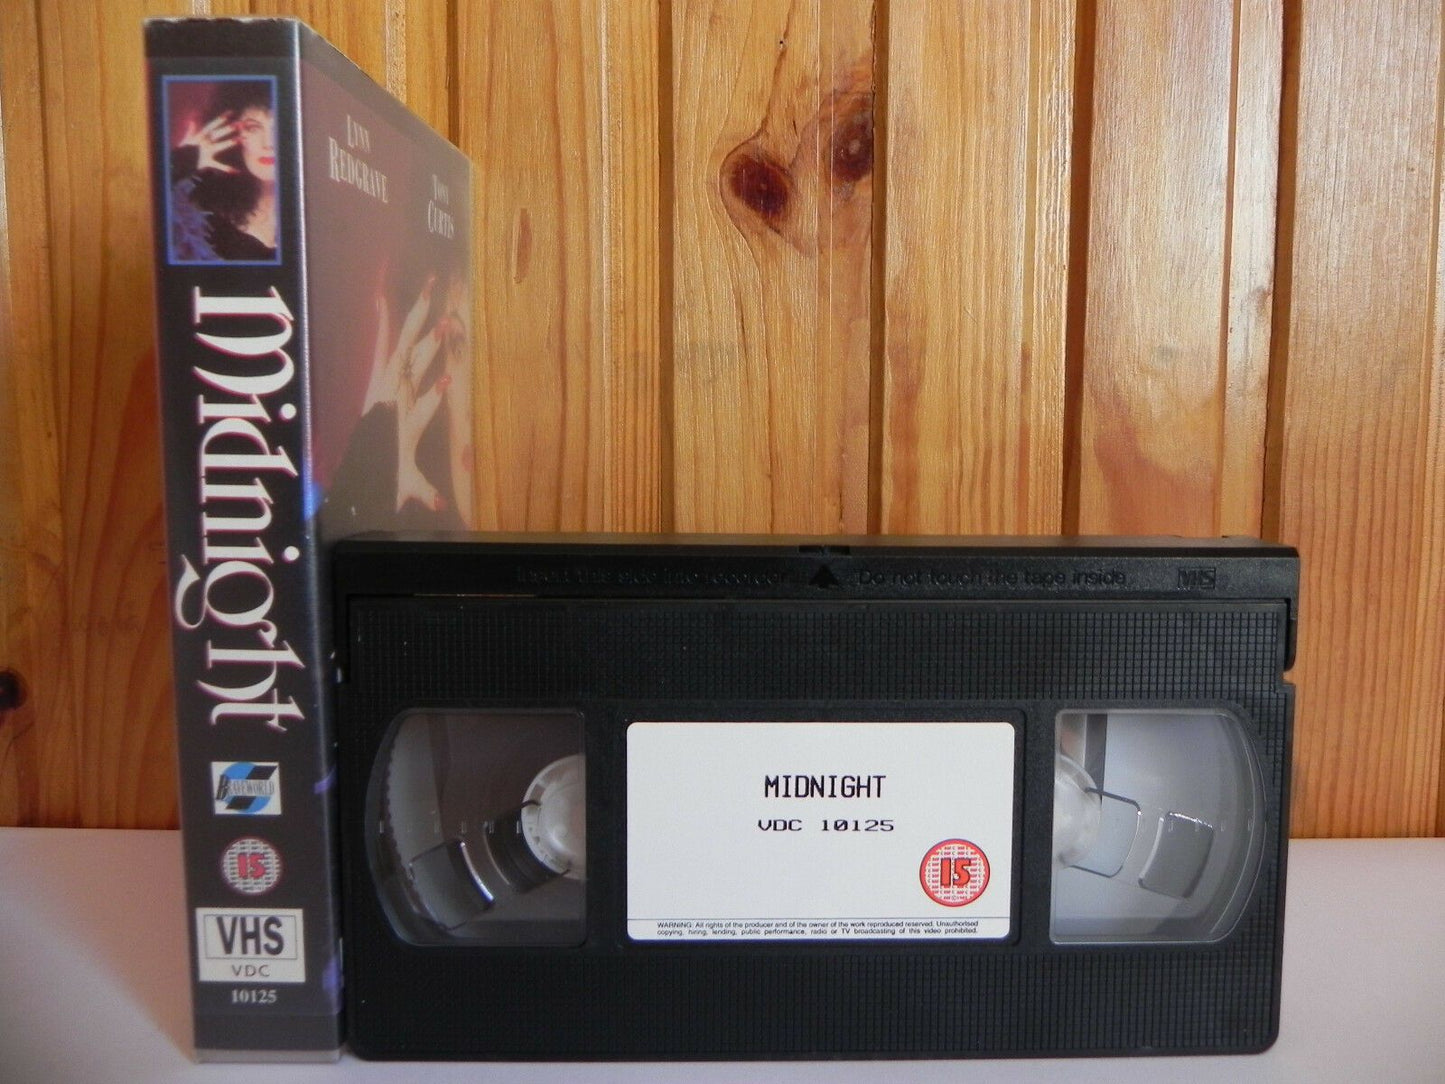 Midnight - Braveworld - A Devilish Comedy - Lynn Redgrave - Tony Curtis - VHS-